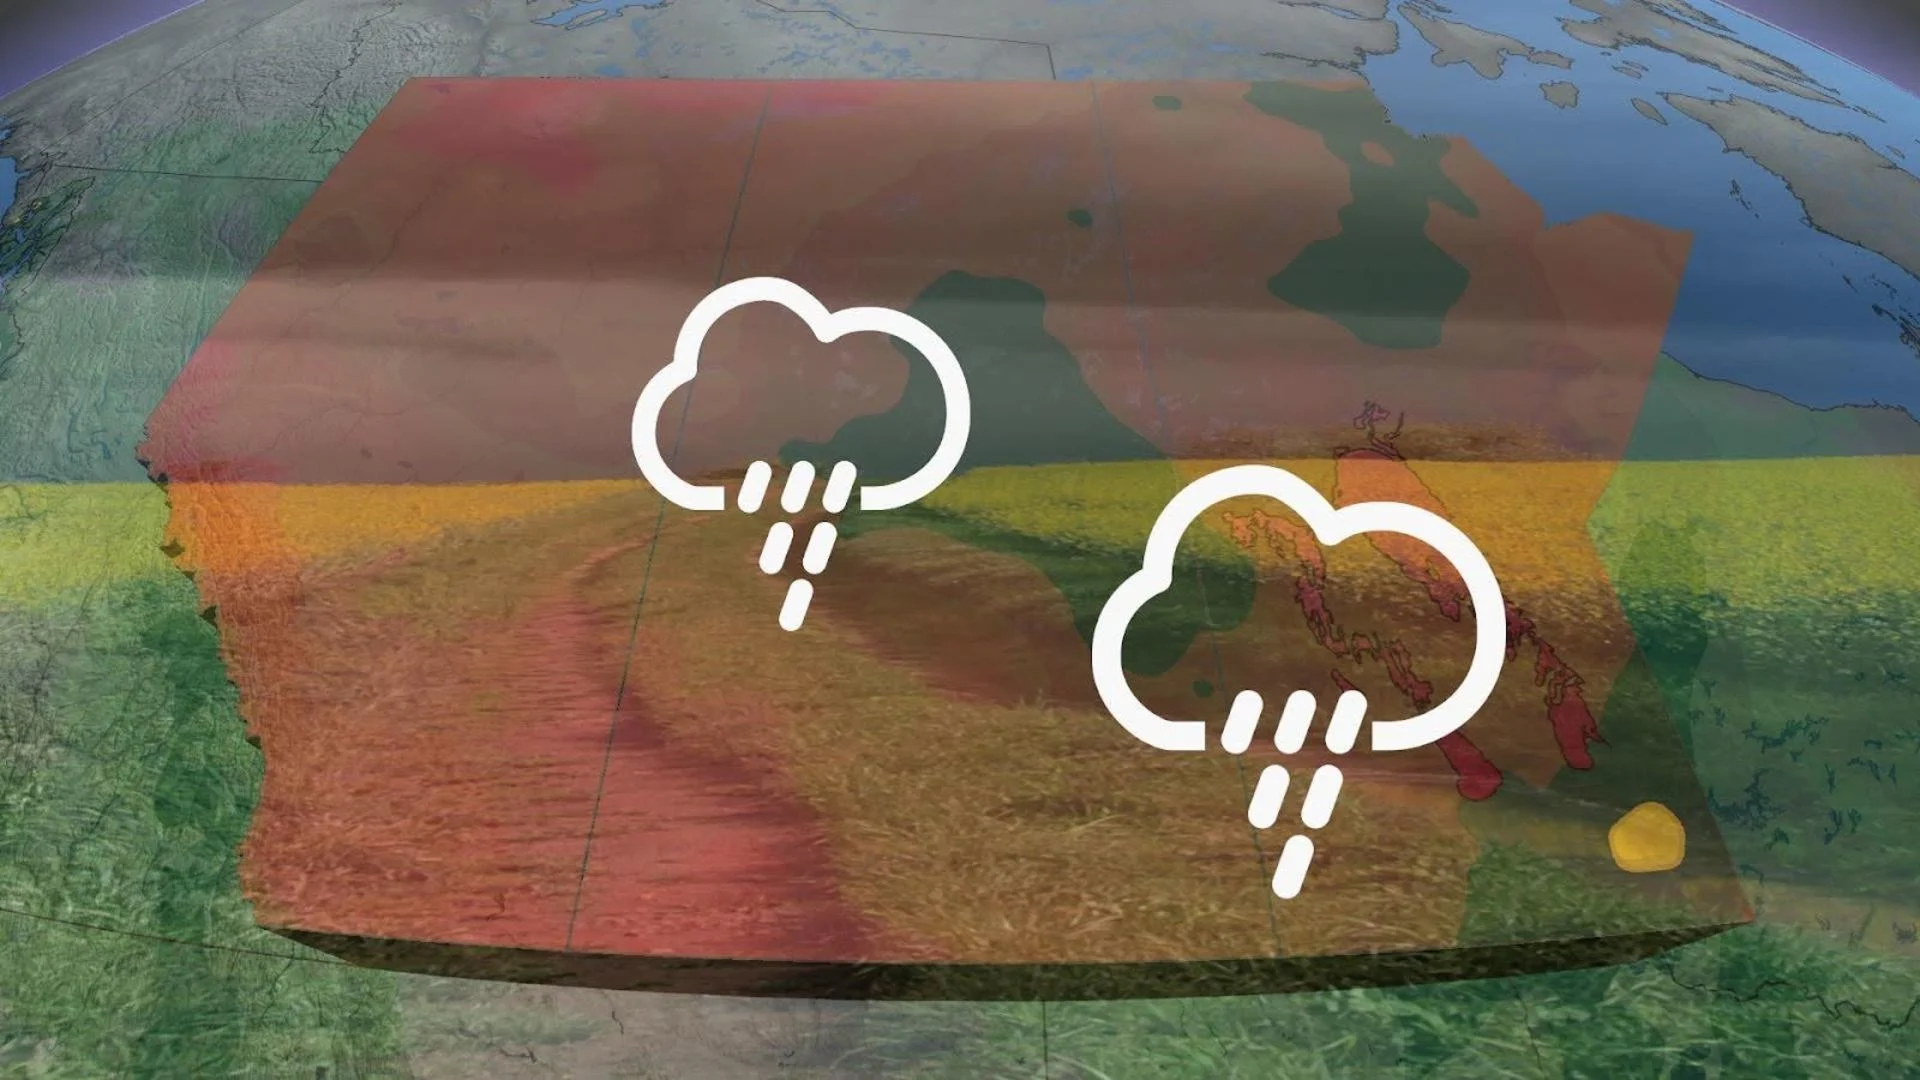 Get ready for widespread beneficial rains this week as an unusual slug of Pacific moisture streams into Saskatchewan